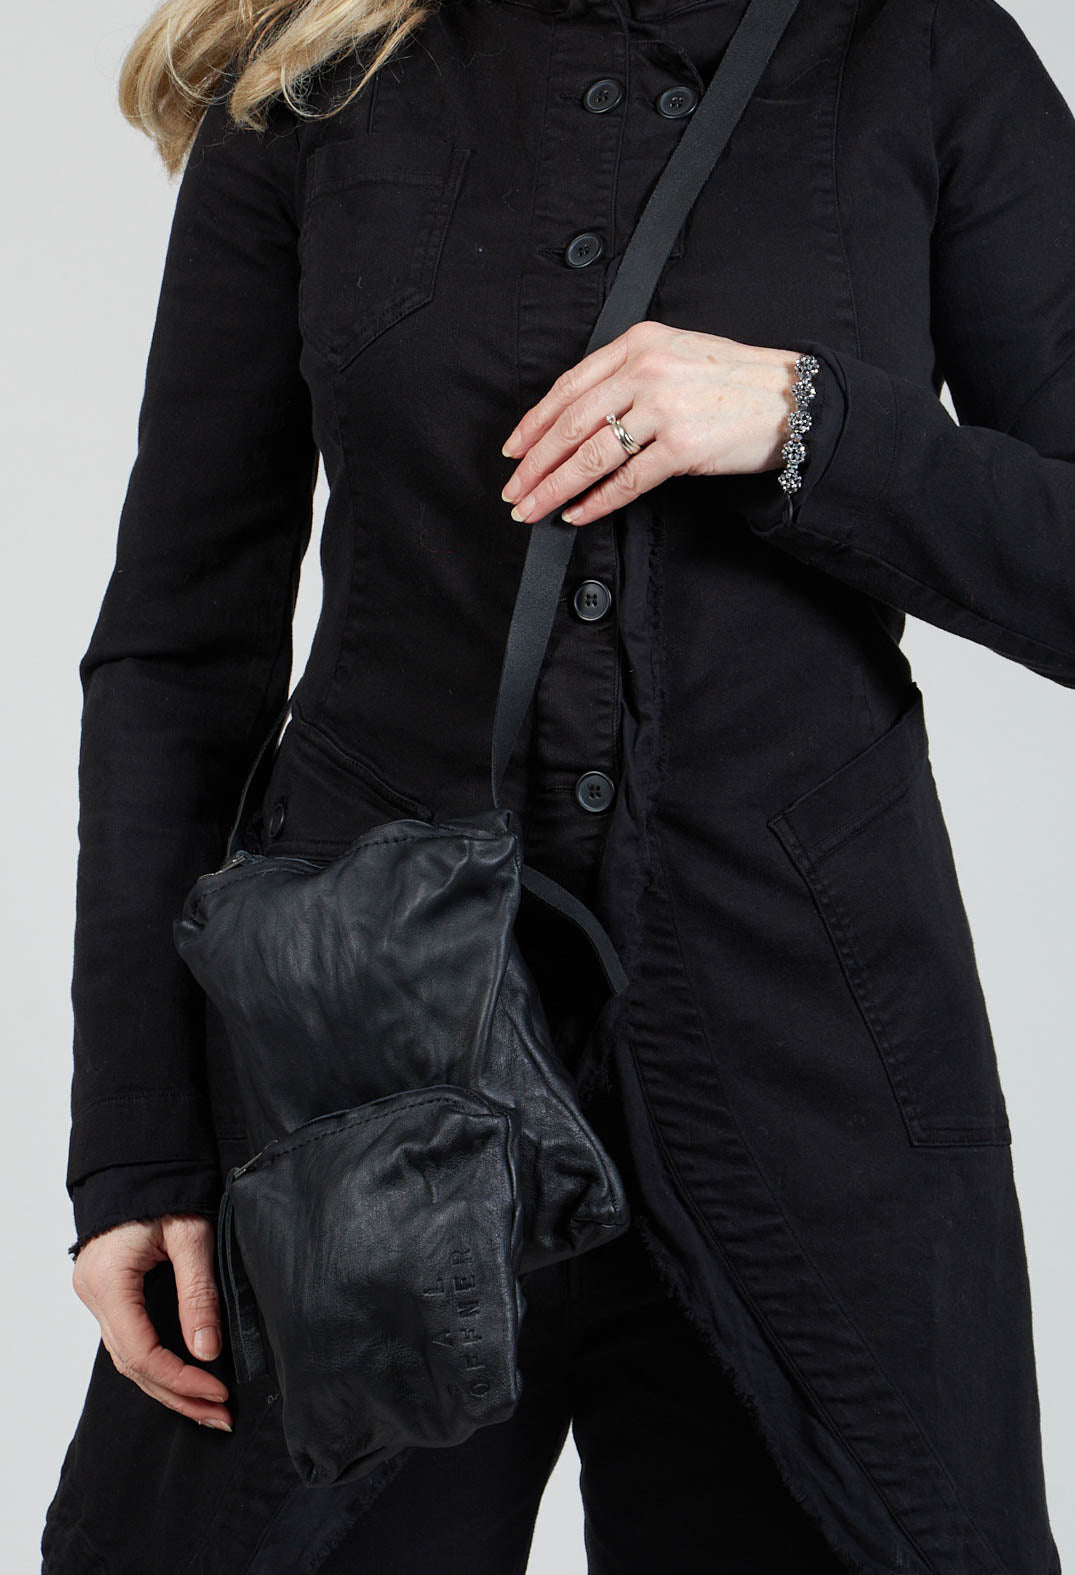 Twin Pocket Bag in Black Original